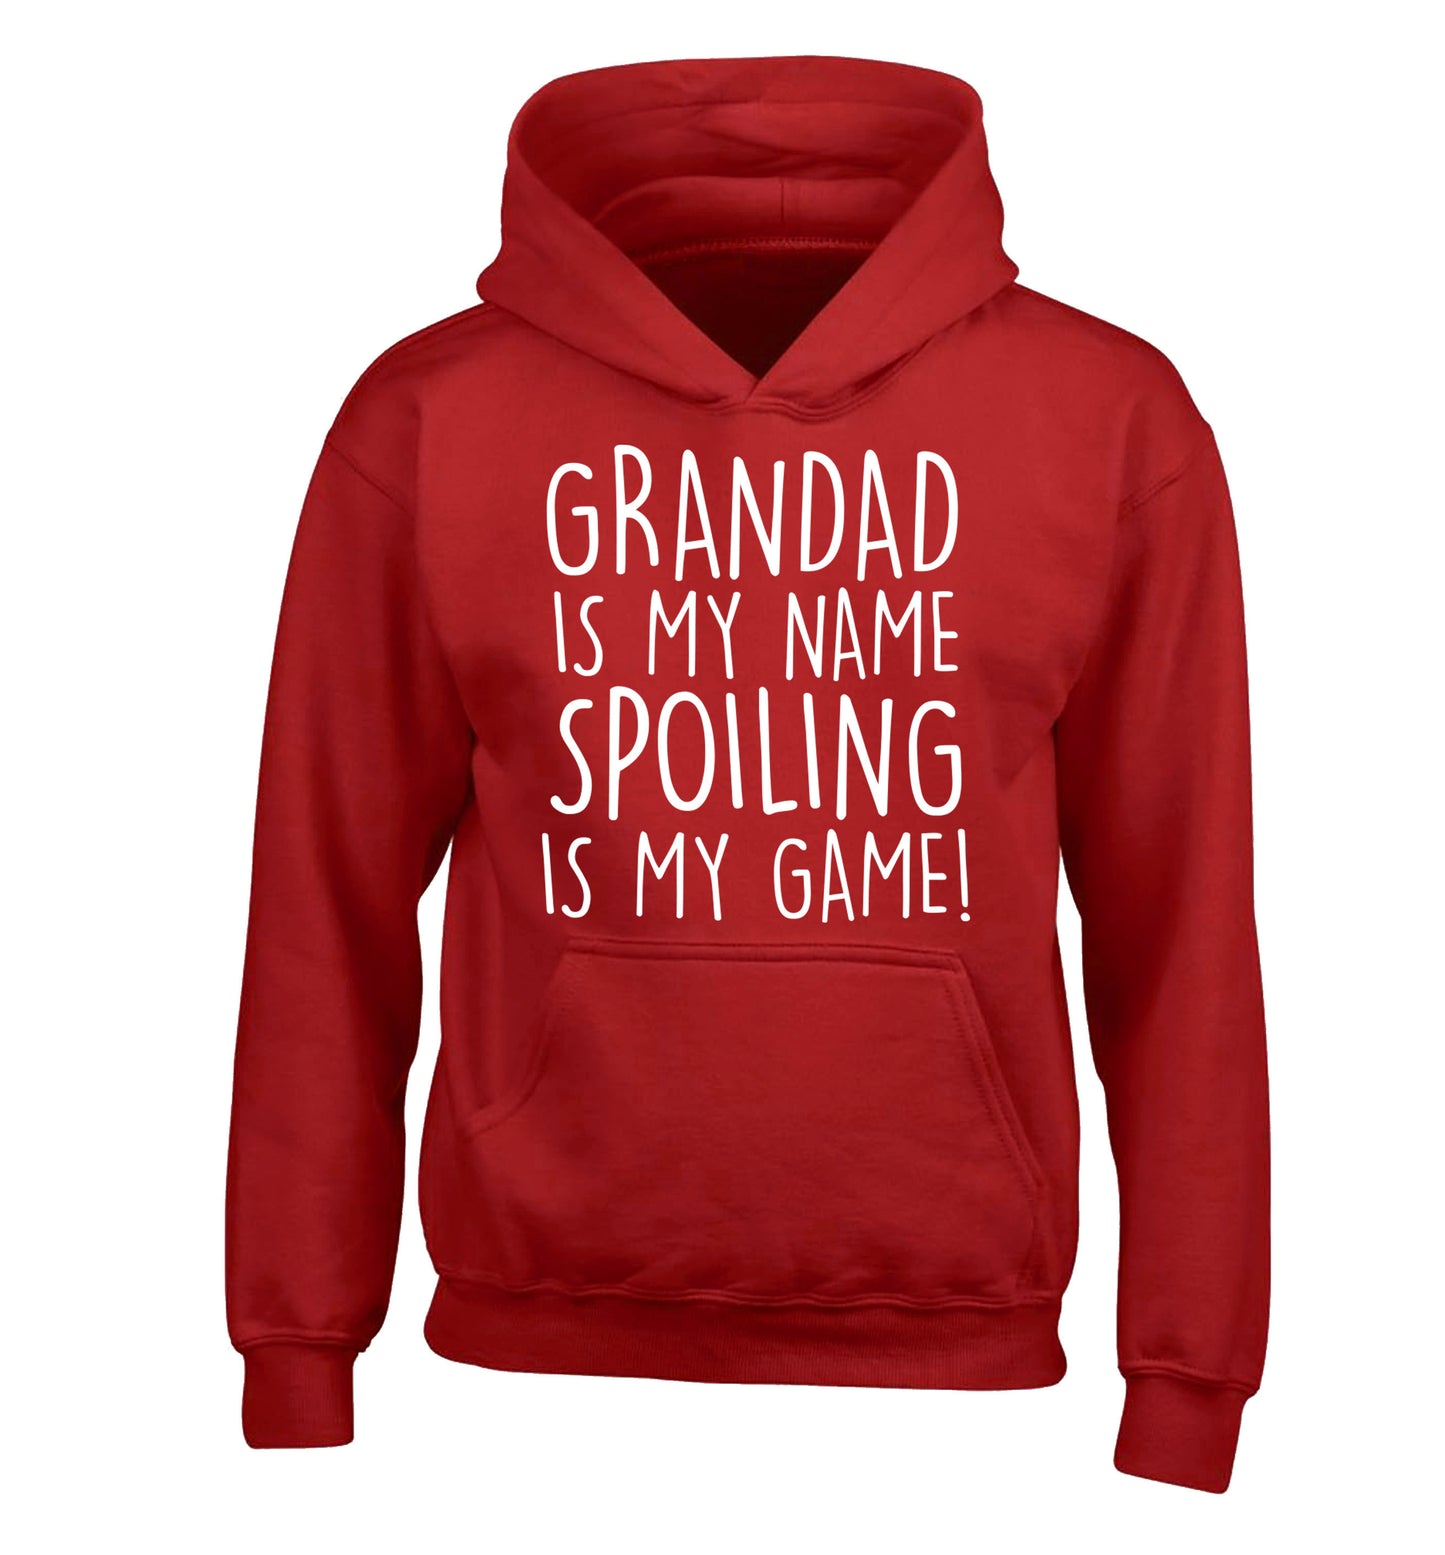 Grandad is my name, spoiling is my game children's red hoodie 12-14 Years